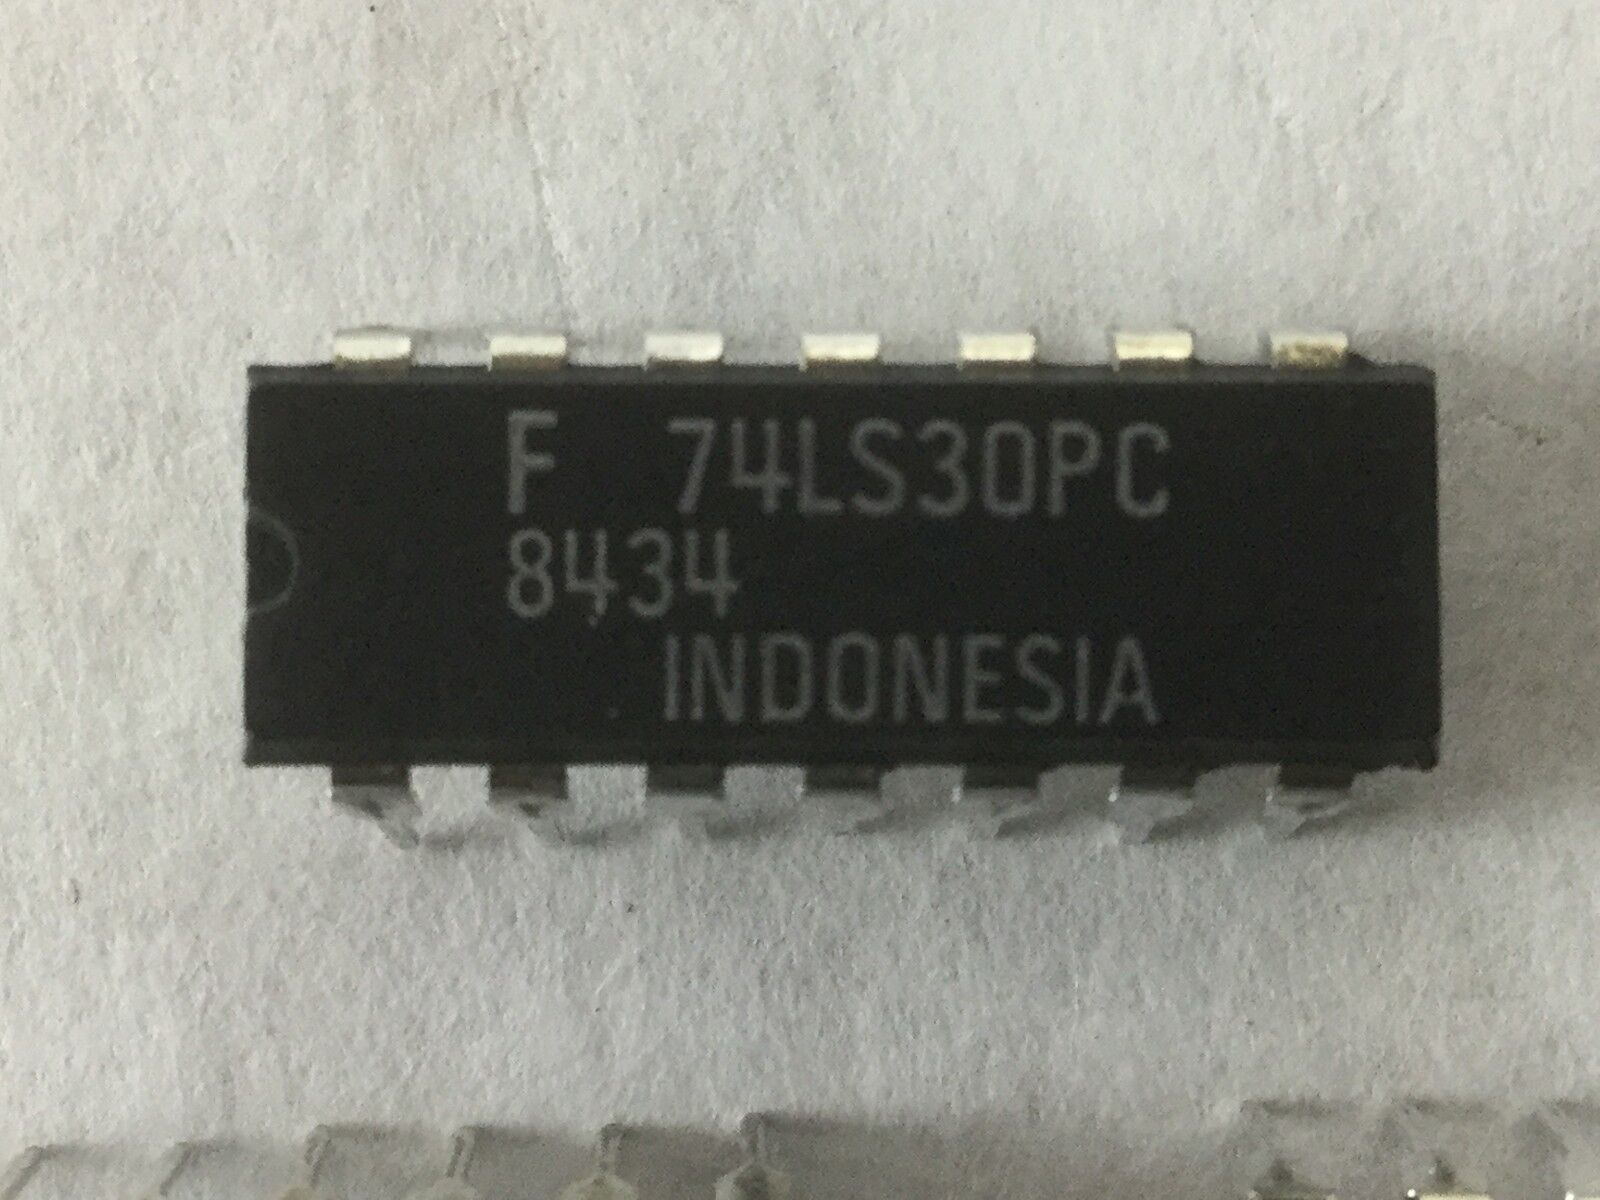 F 74LS30PC 14-Pin Dip Integrated Circuit (Lot of 5)